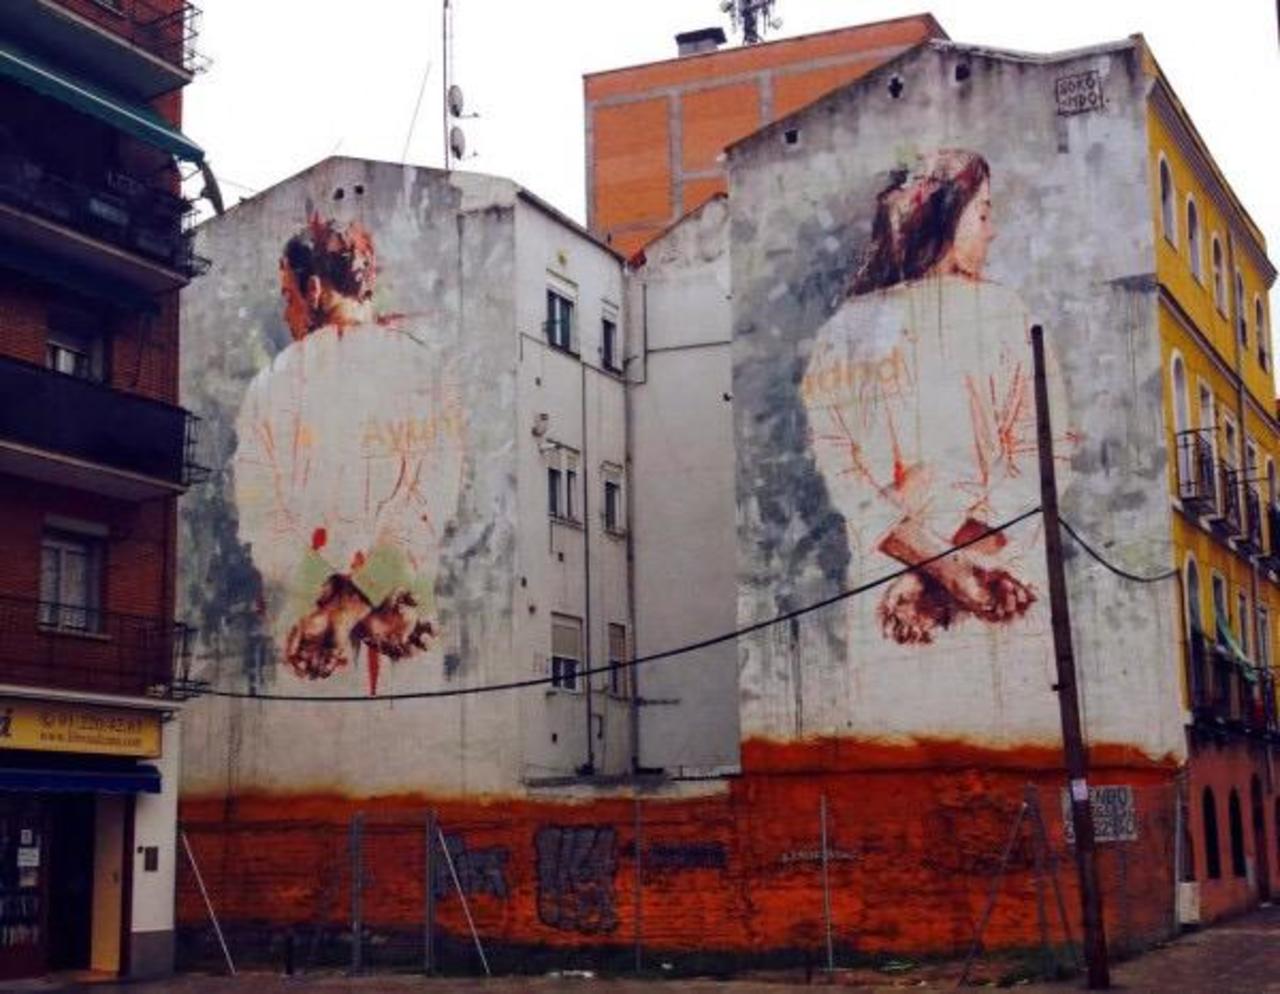 “@mikecooln: "@Pitchuskita: Borondo
Madrid, Spain 
#streetart #art #graffiti #mural http://t.co/9umAI817DH" love this”